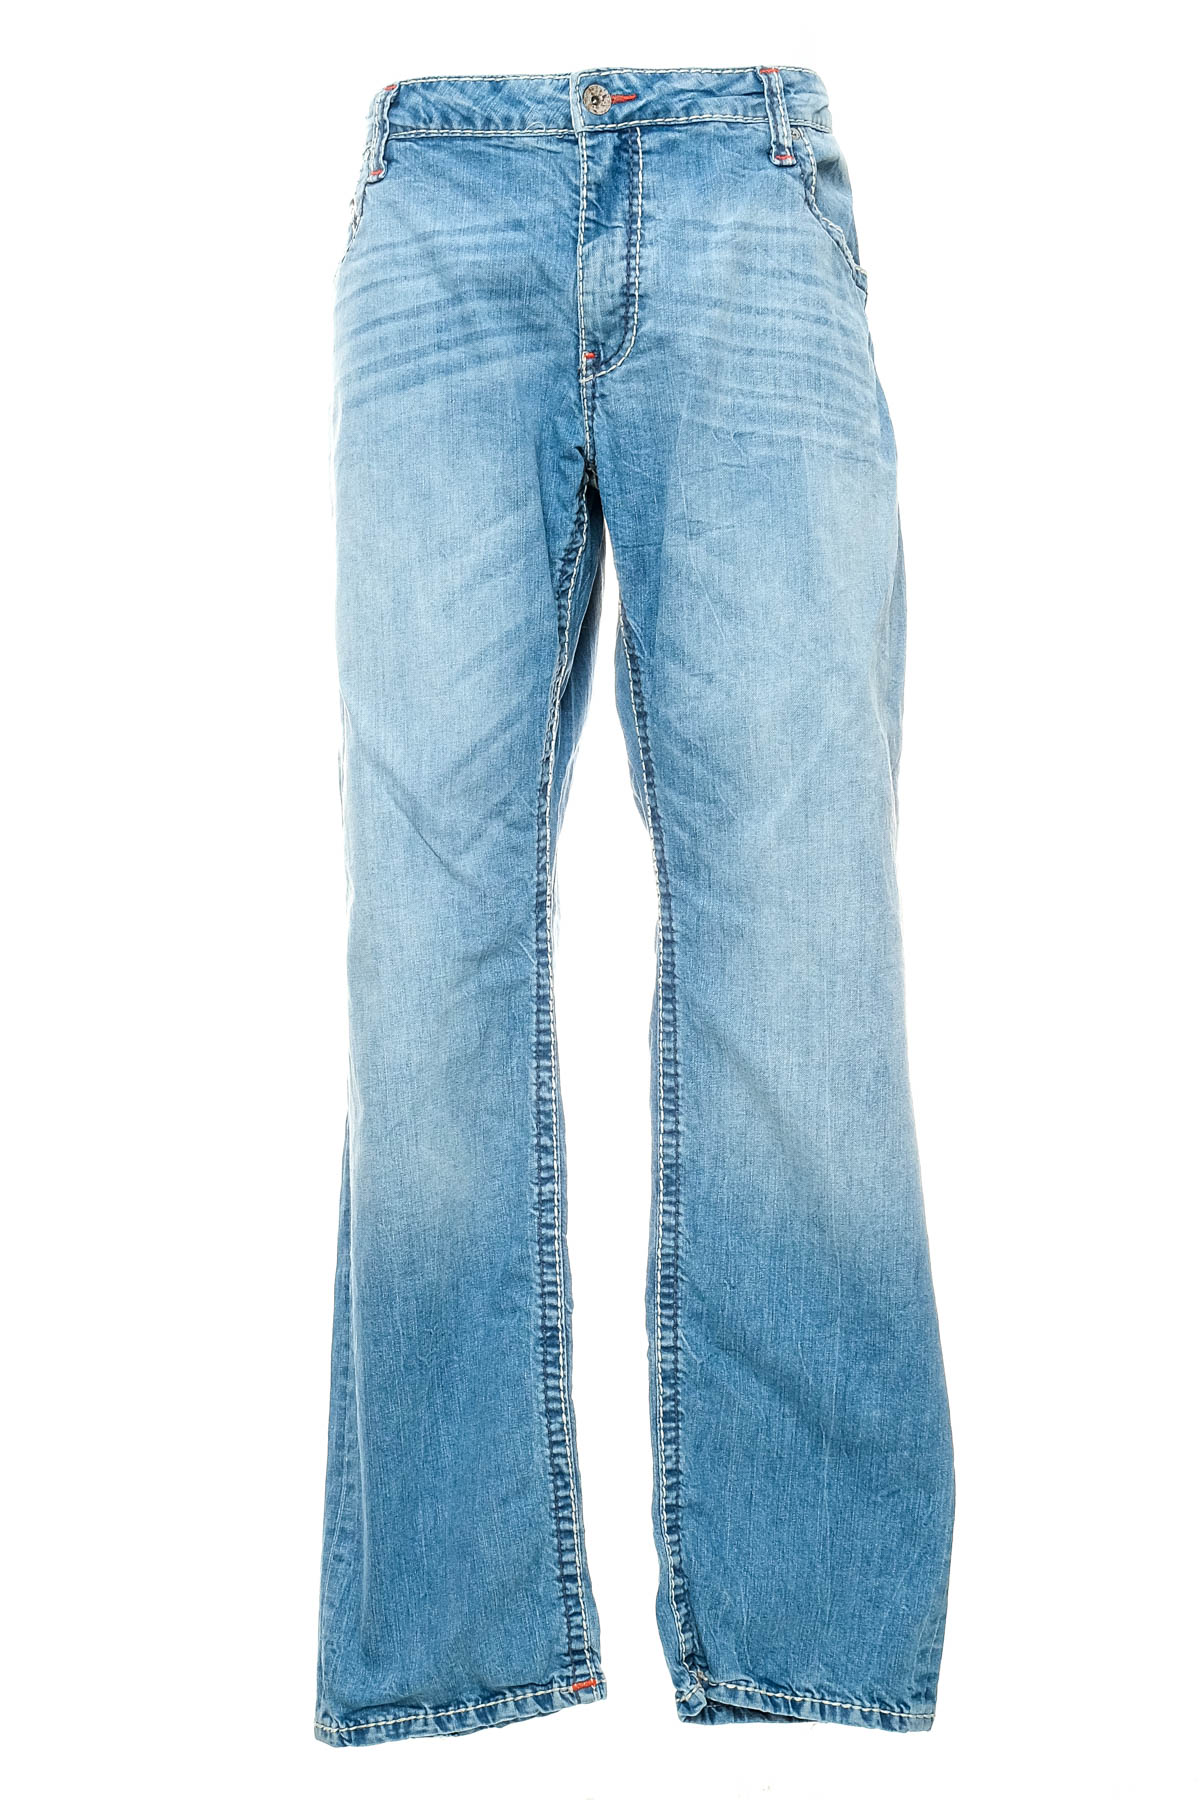 Men's jeans - CAMP DAVID - 0